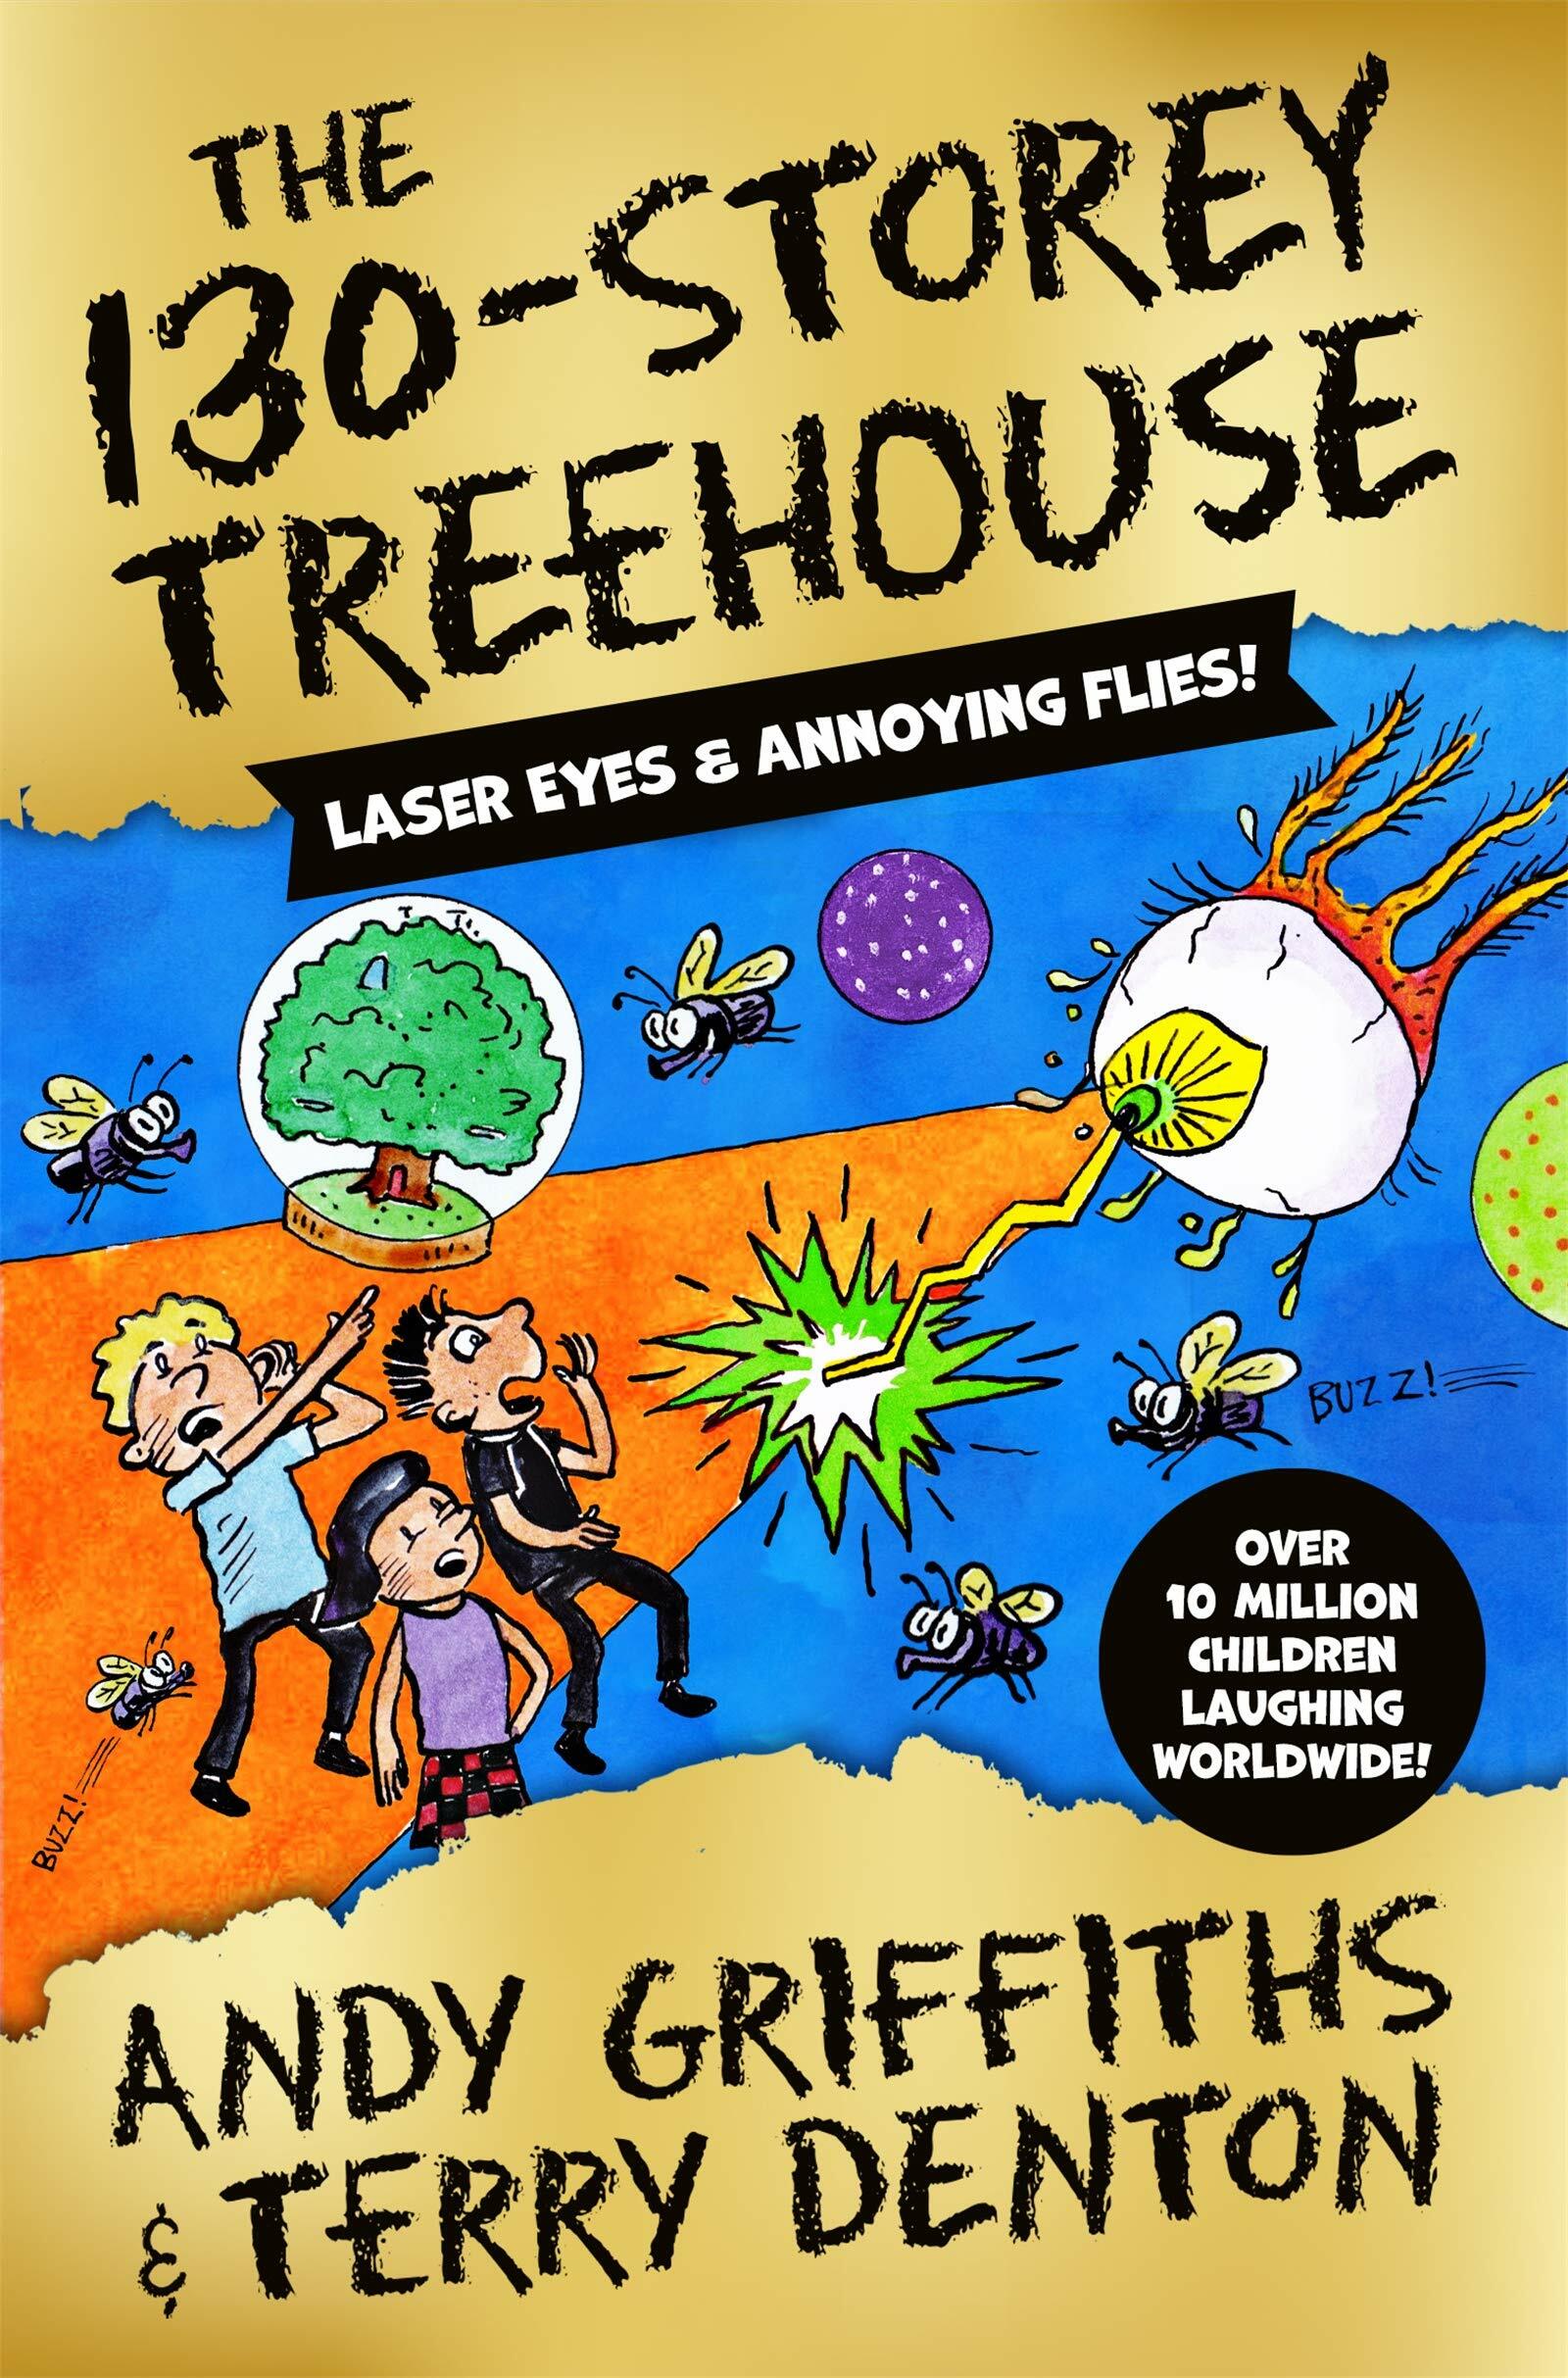 The 130-Storey Treehouse (Paperback, 영국판)